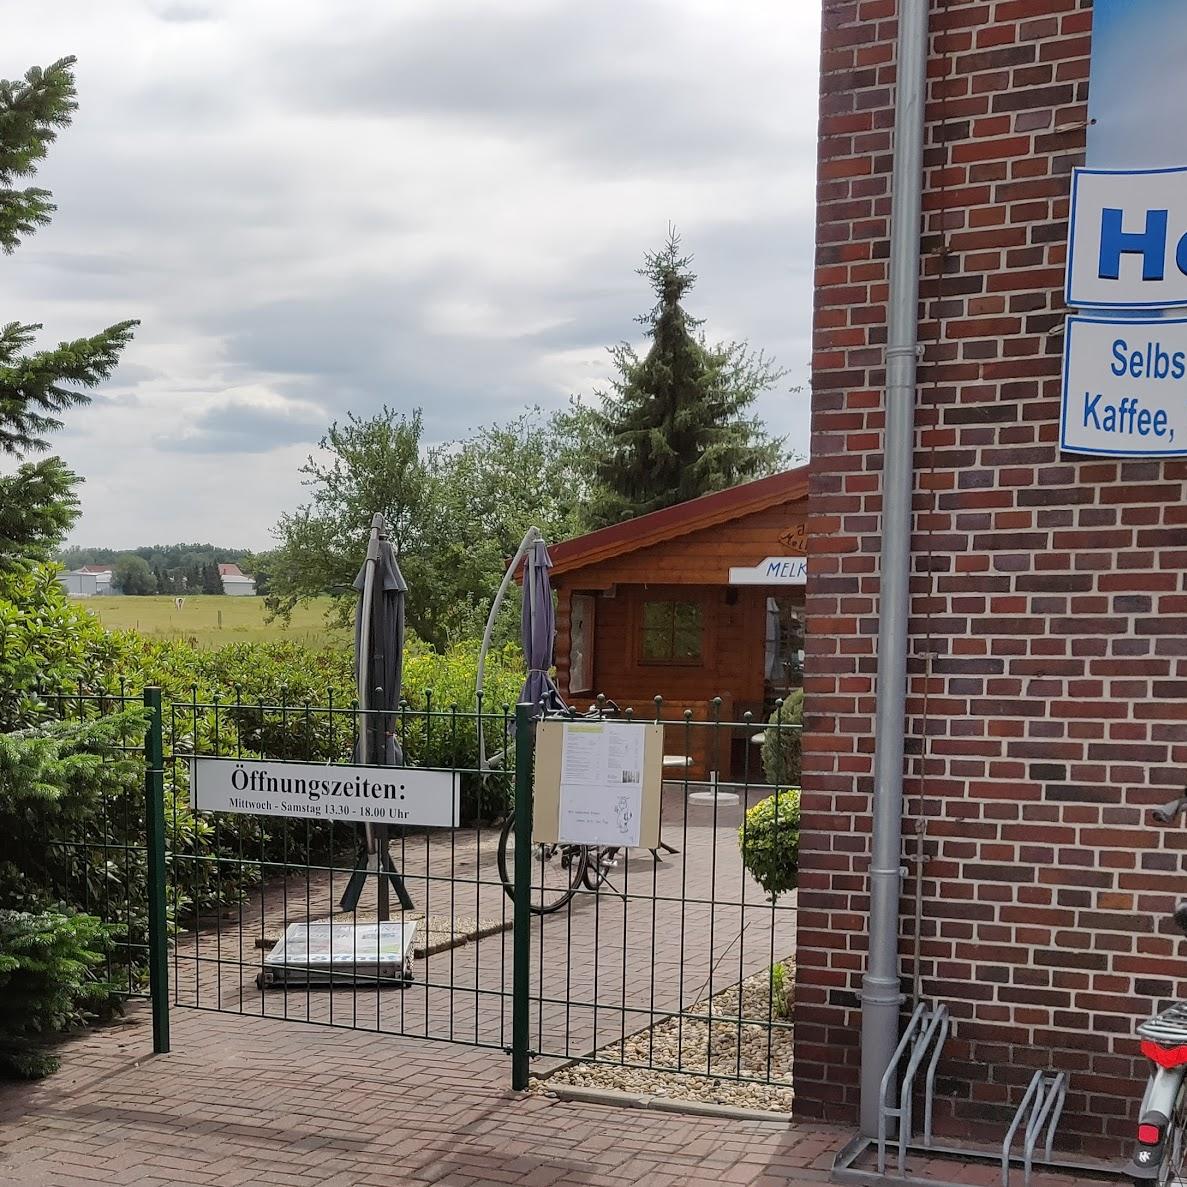 Restaurant "Hofcafé Jula Weers" in Ostrhauderfehn